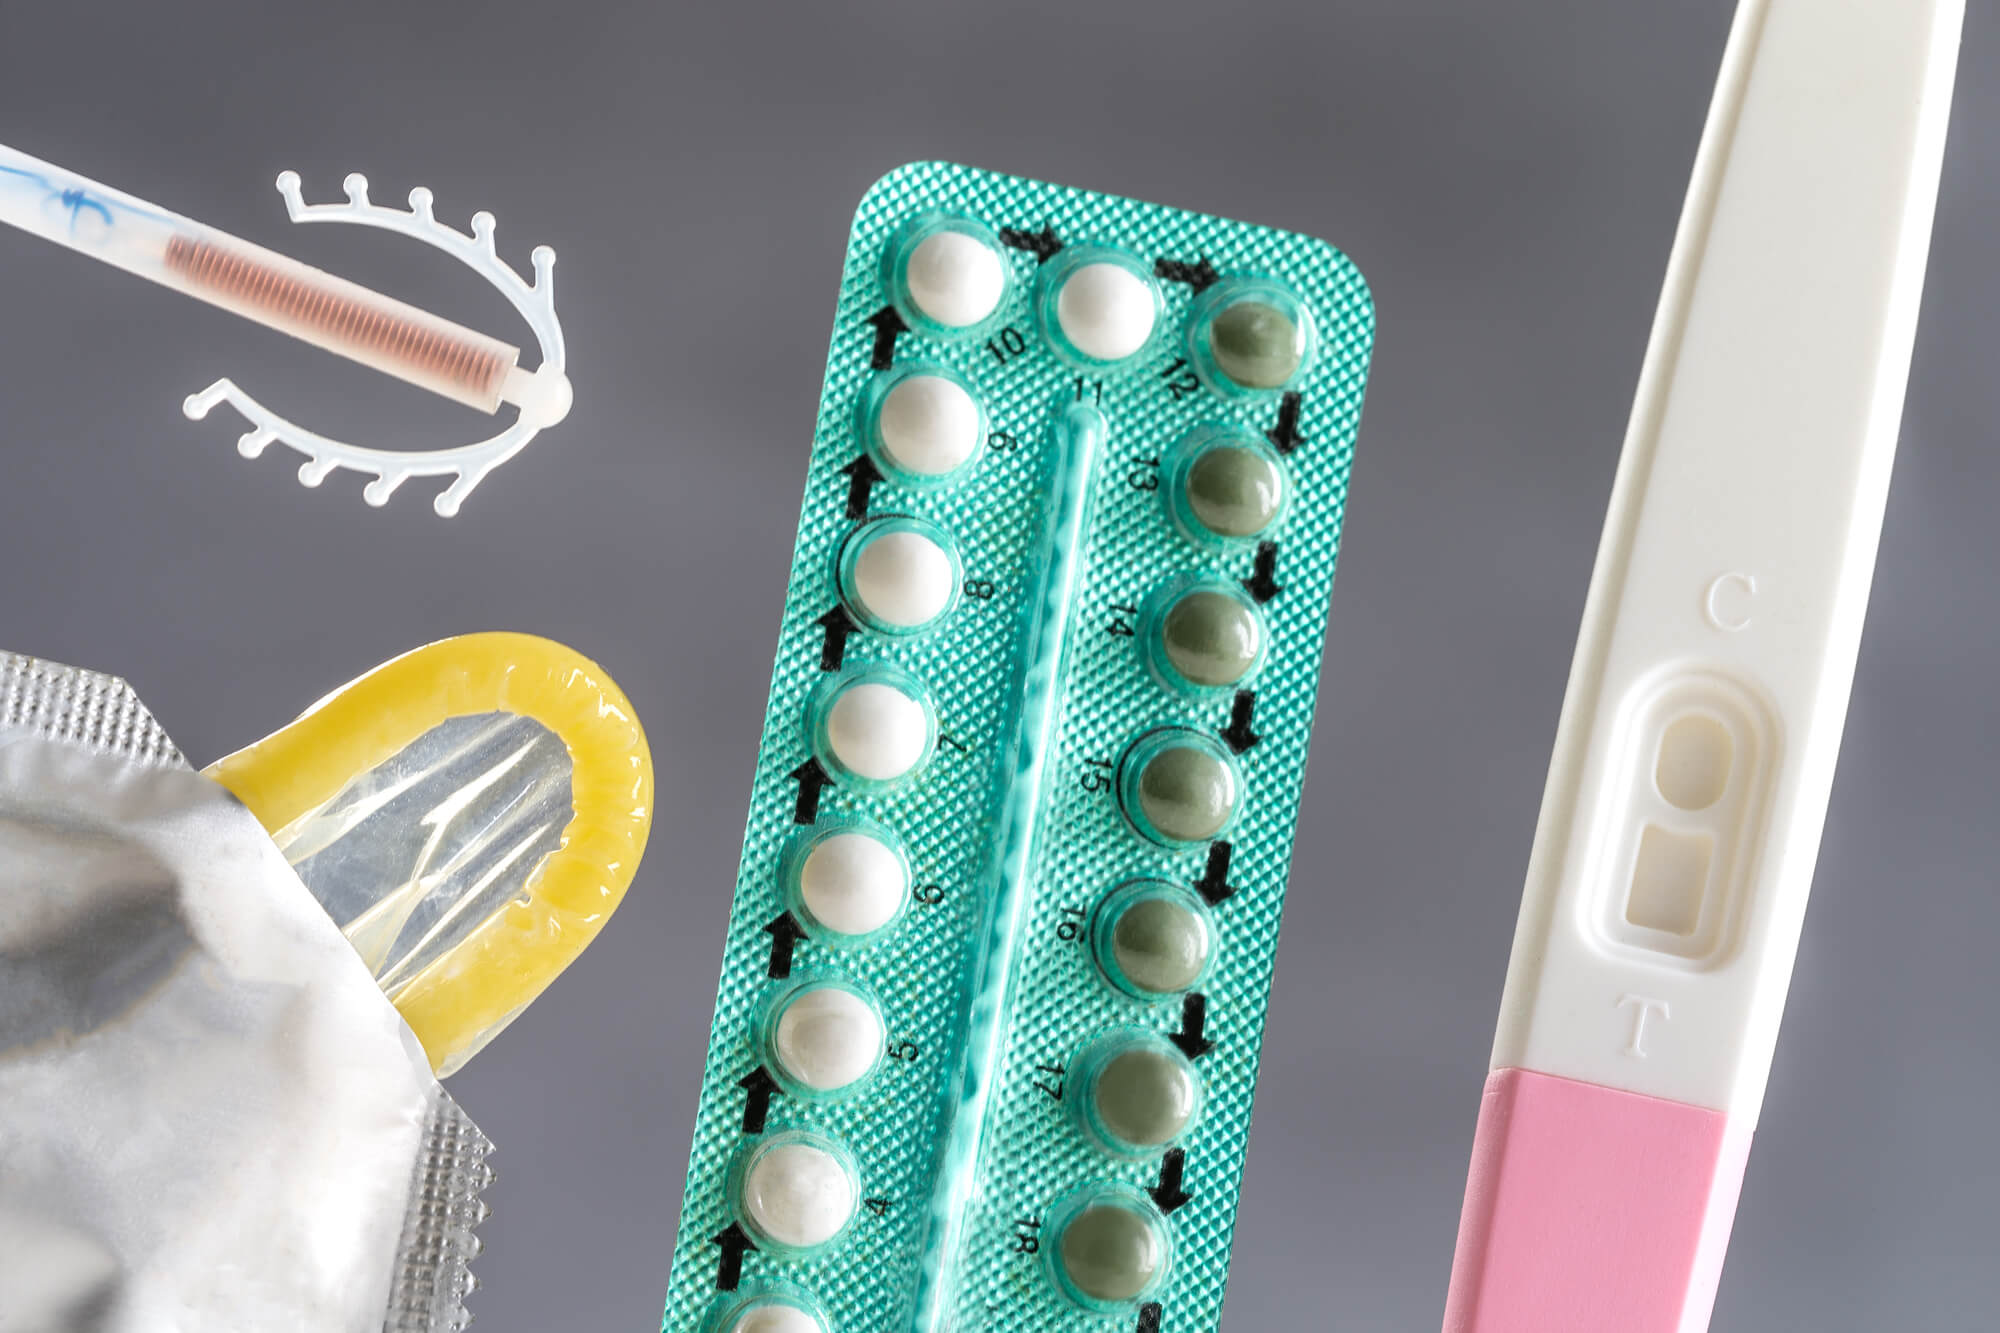 История контрацепции